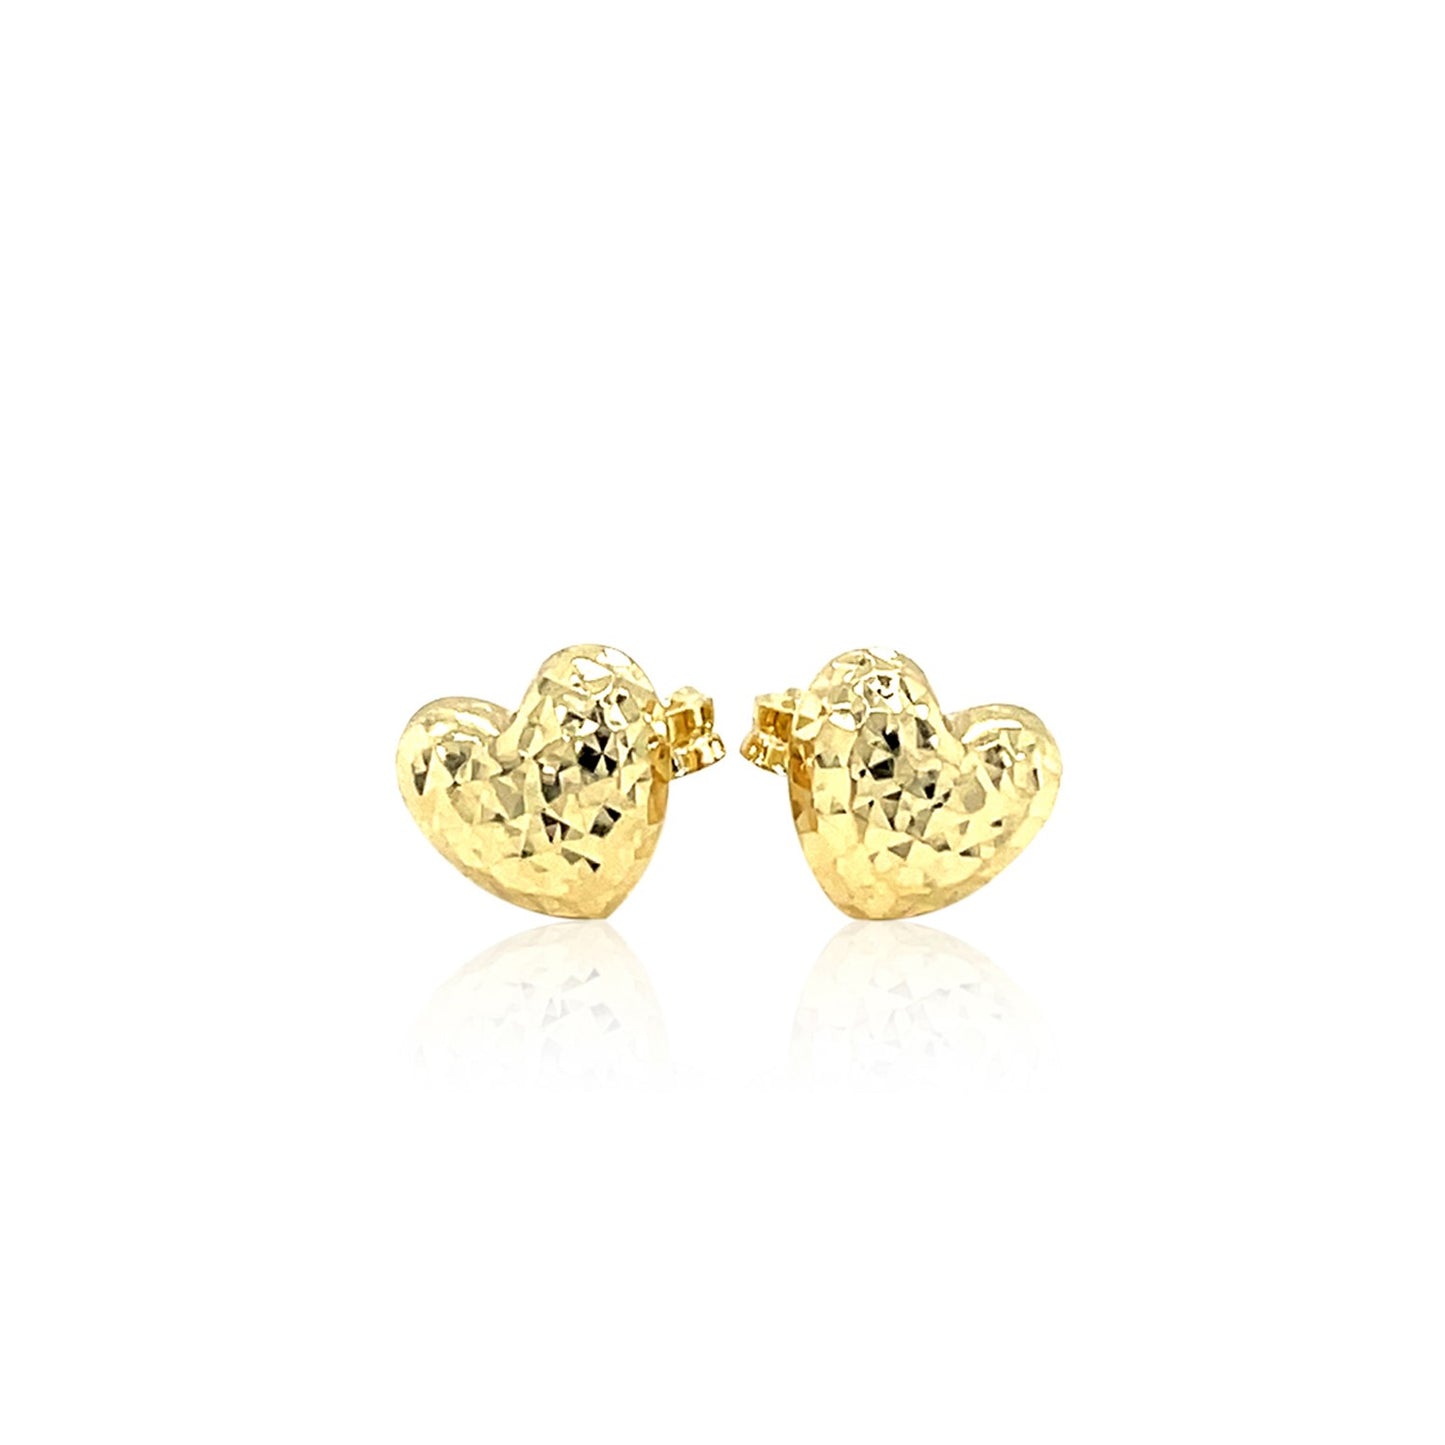 14k Yellow Gold Puffed Heart Earrings with Diamond Cuts(8mm)